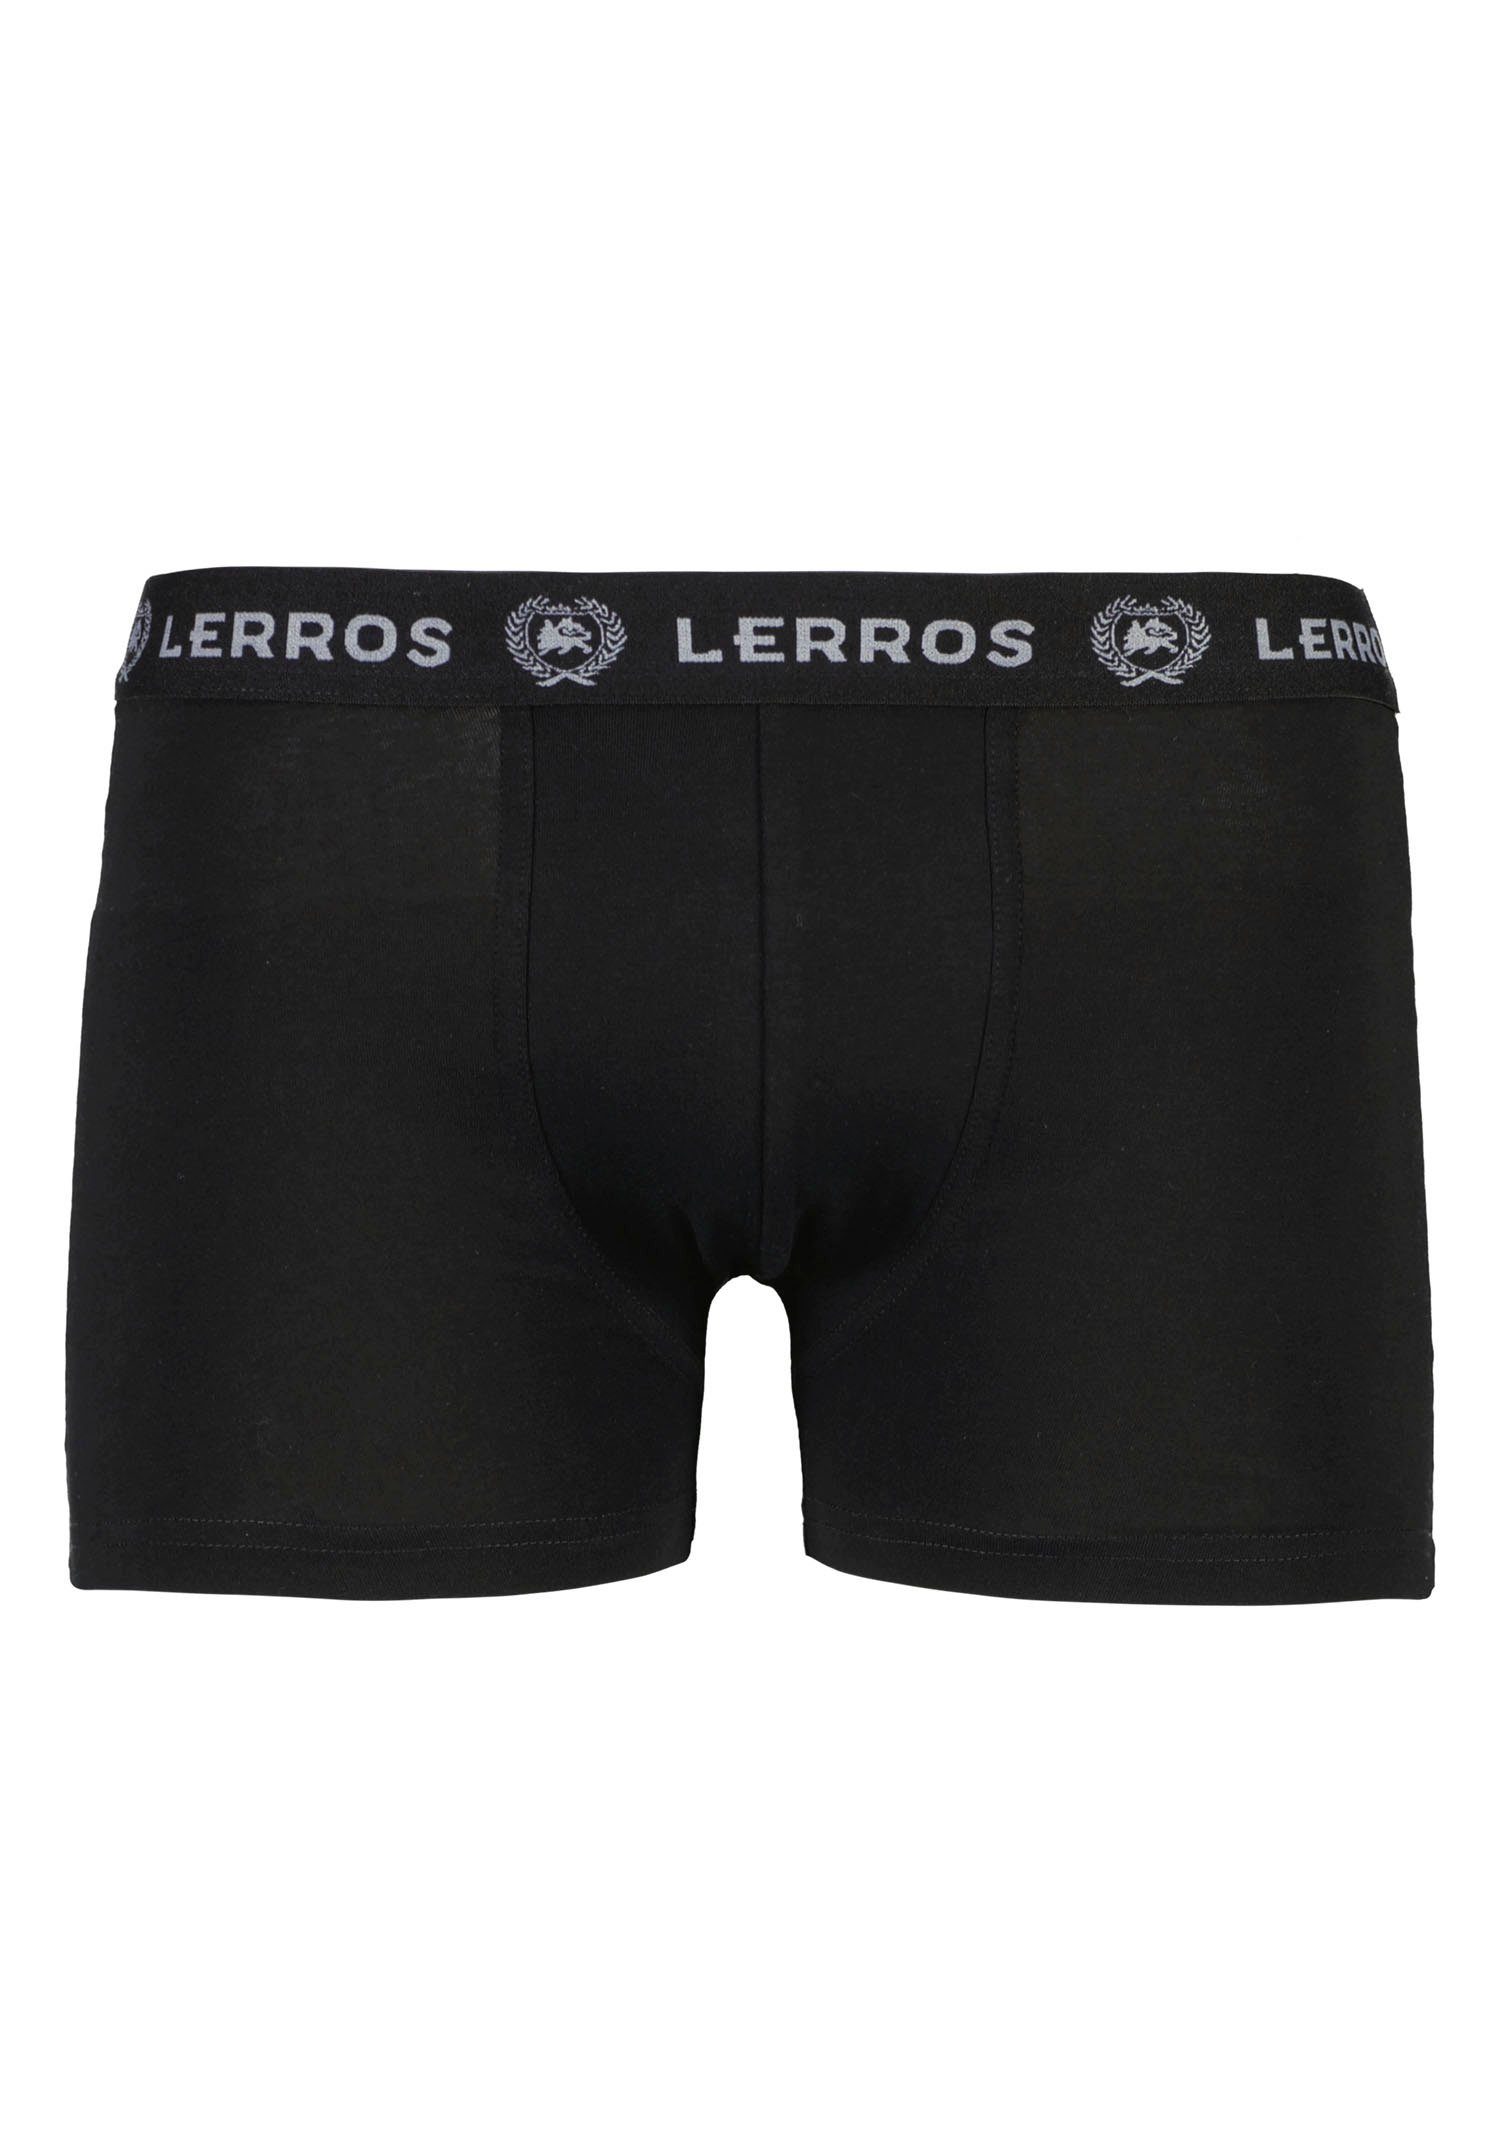 LERROS Boxershorts (Packung, 3er-Pack) schwarz